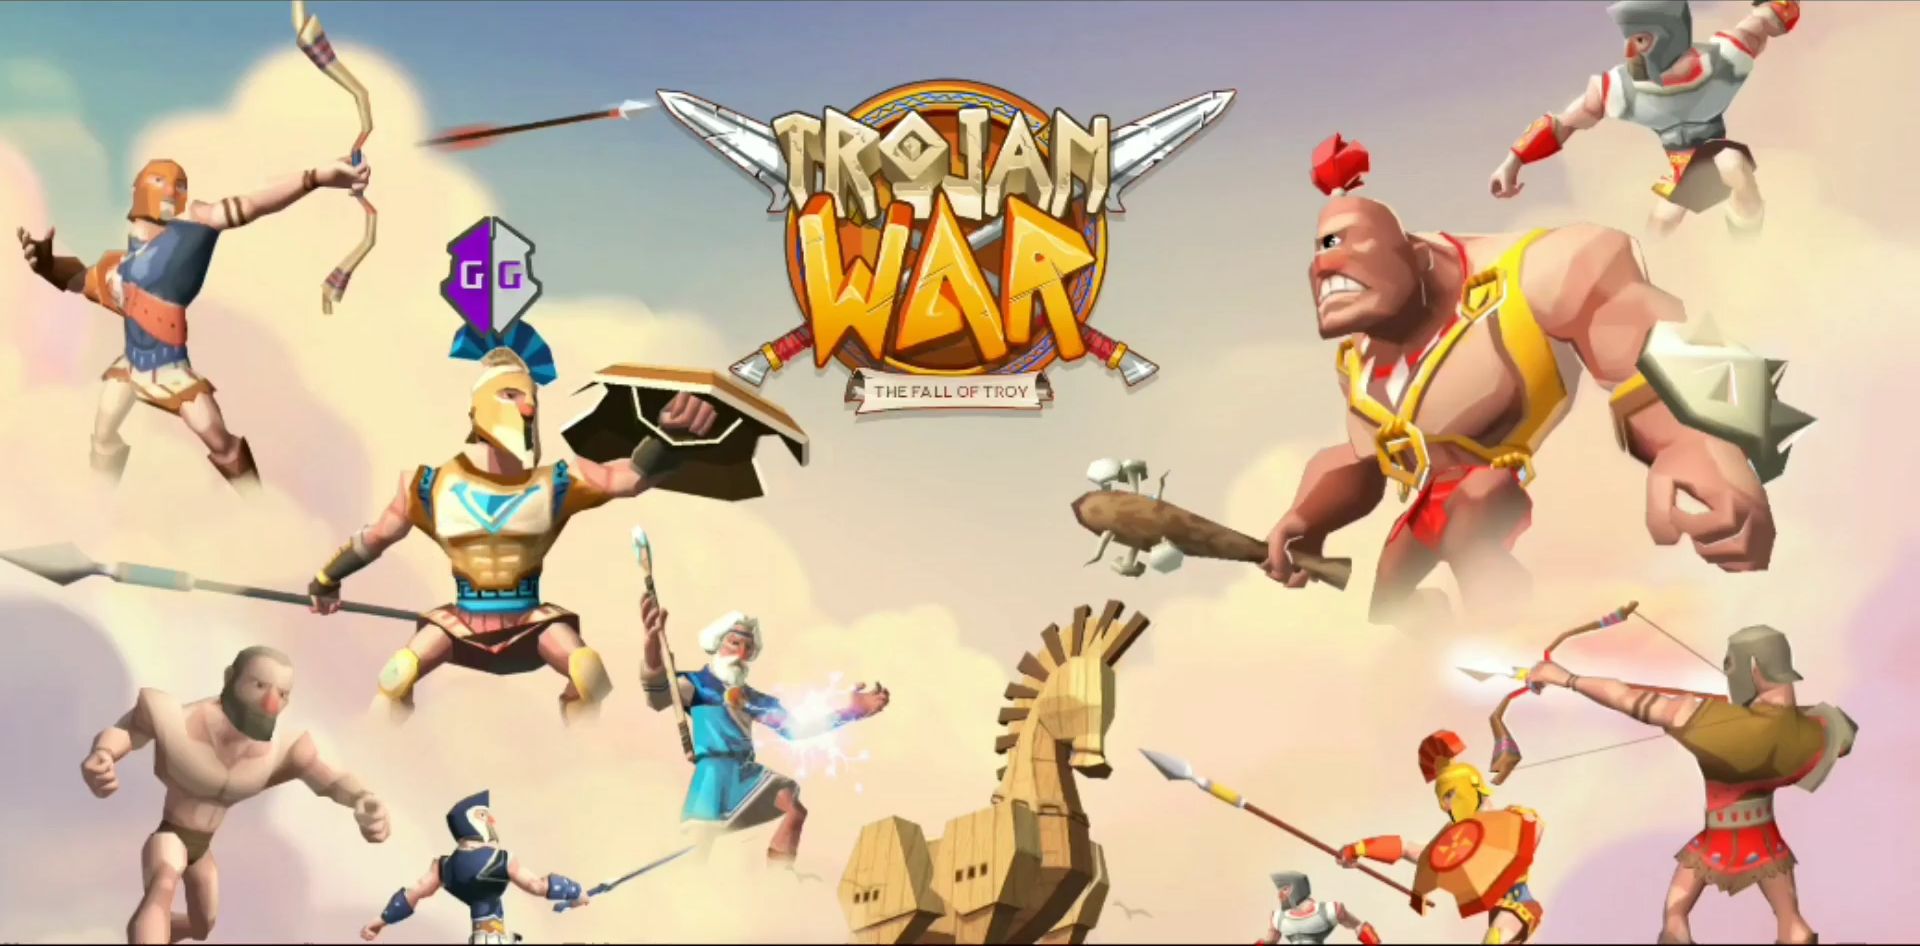 Trojan War Premium: Legend of Sparta for Android